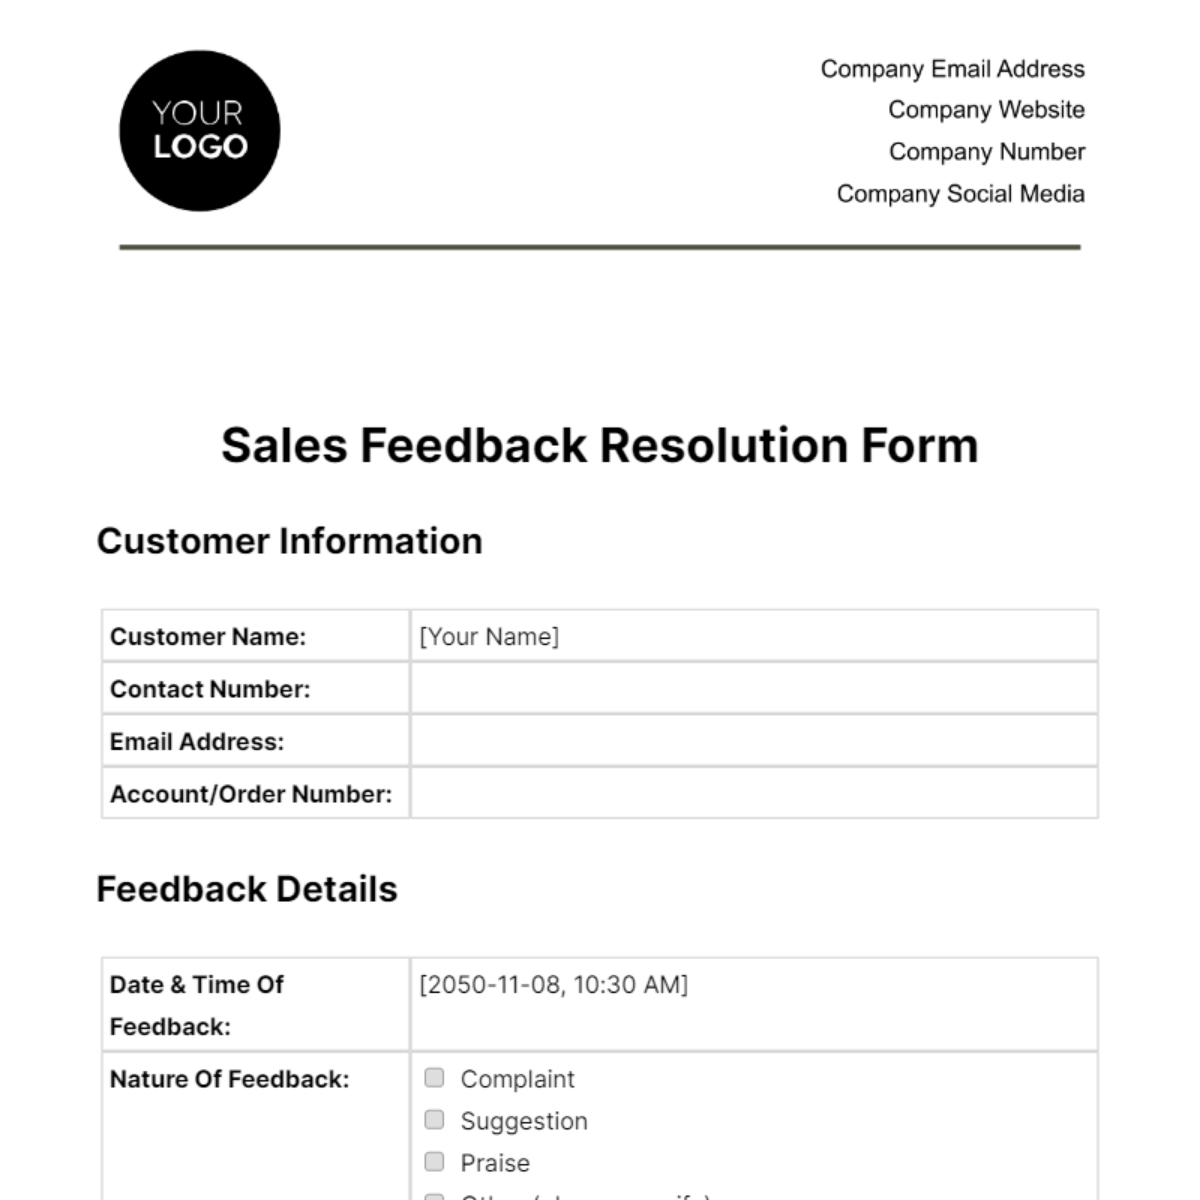 Sales Feedback Resolution Form Template